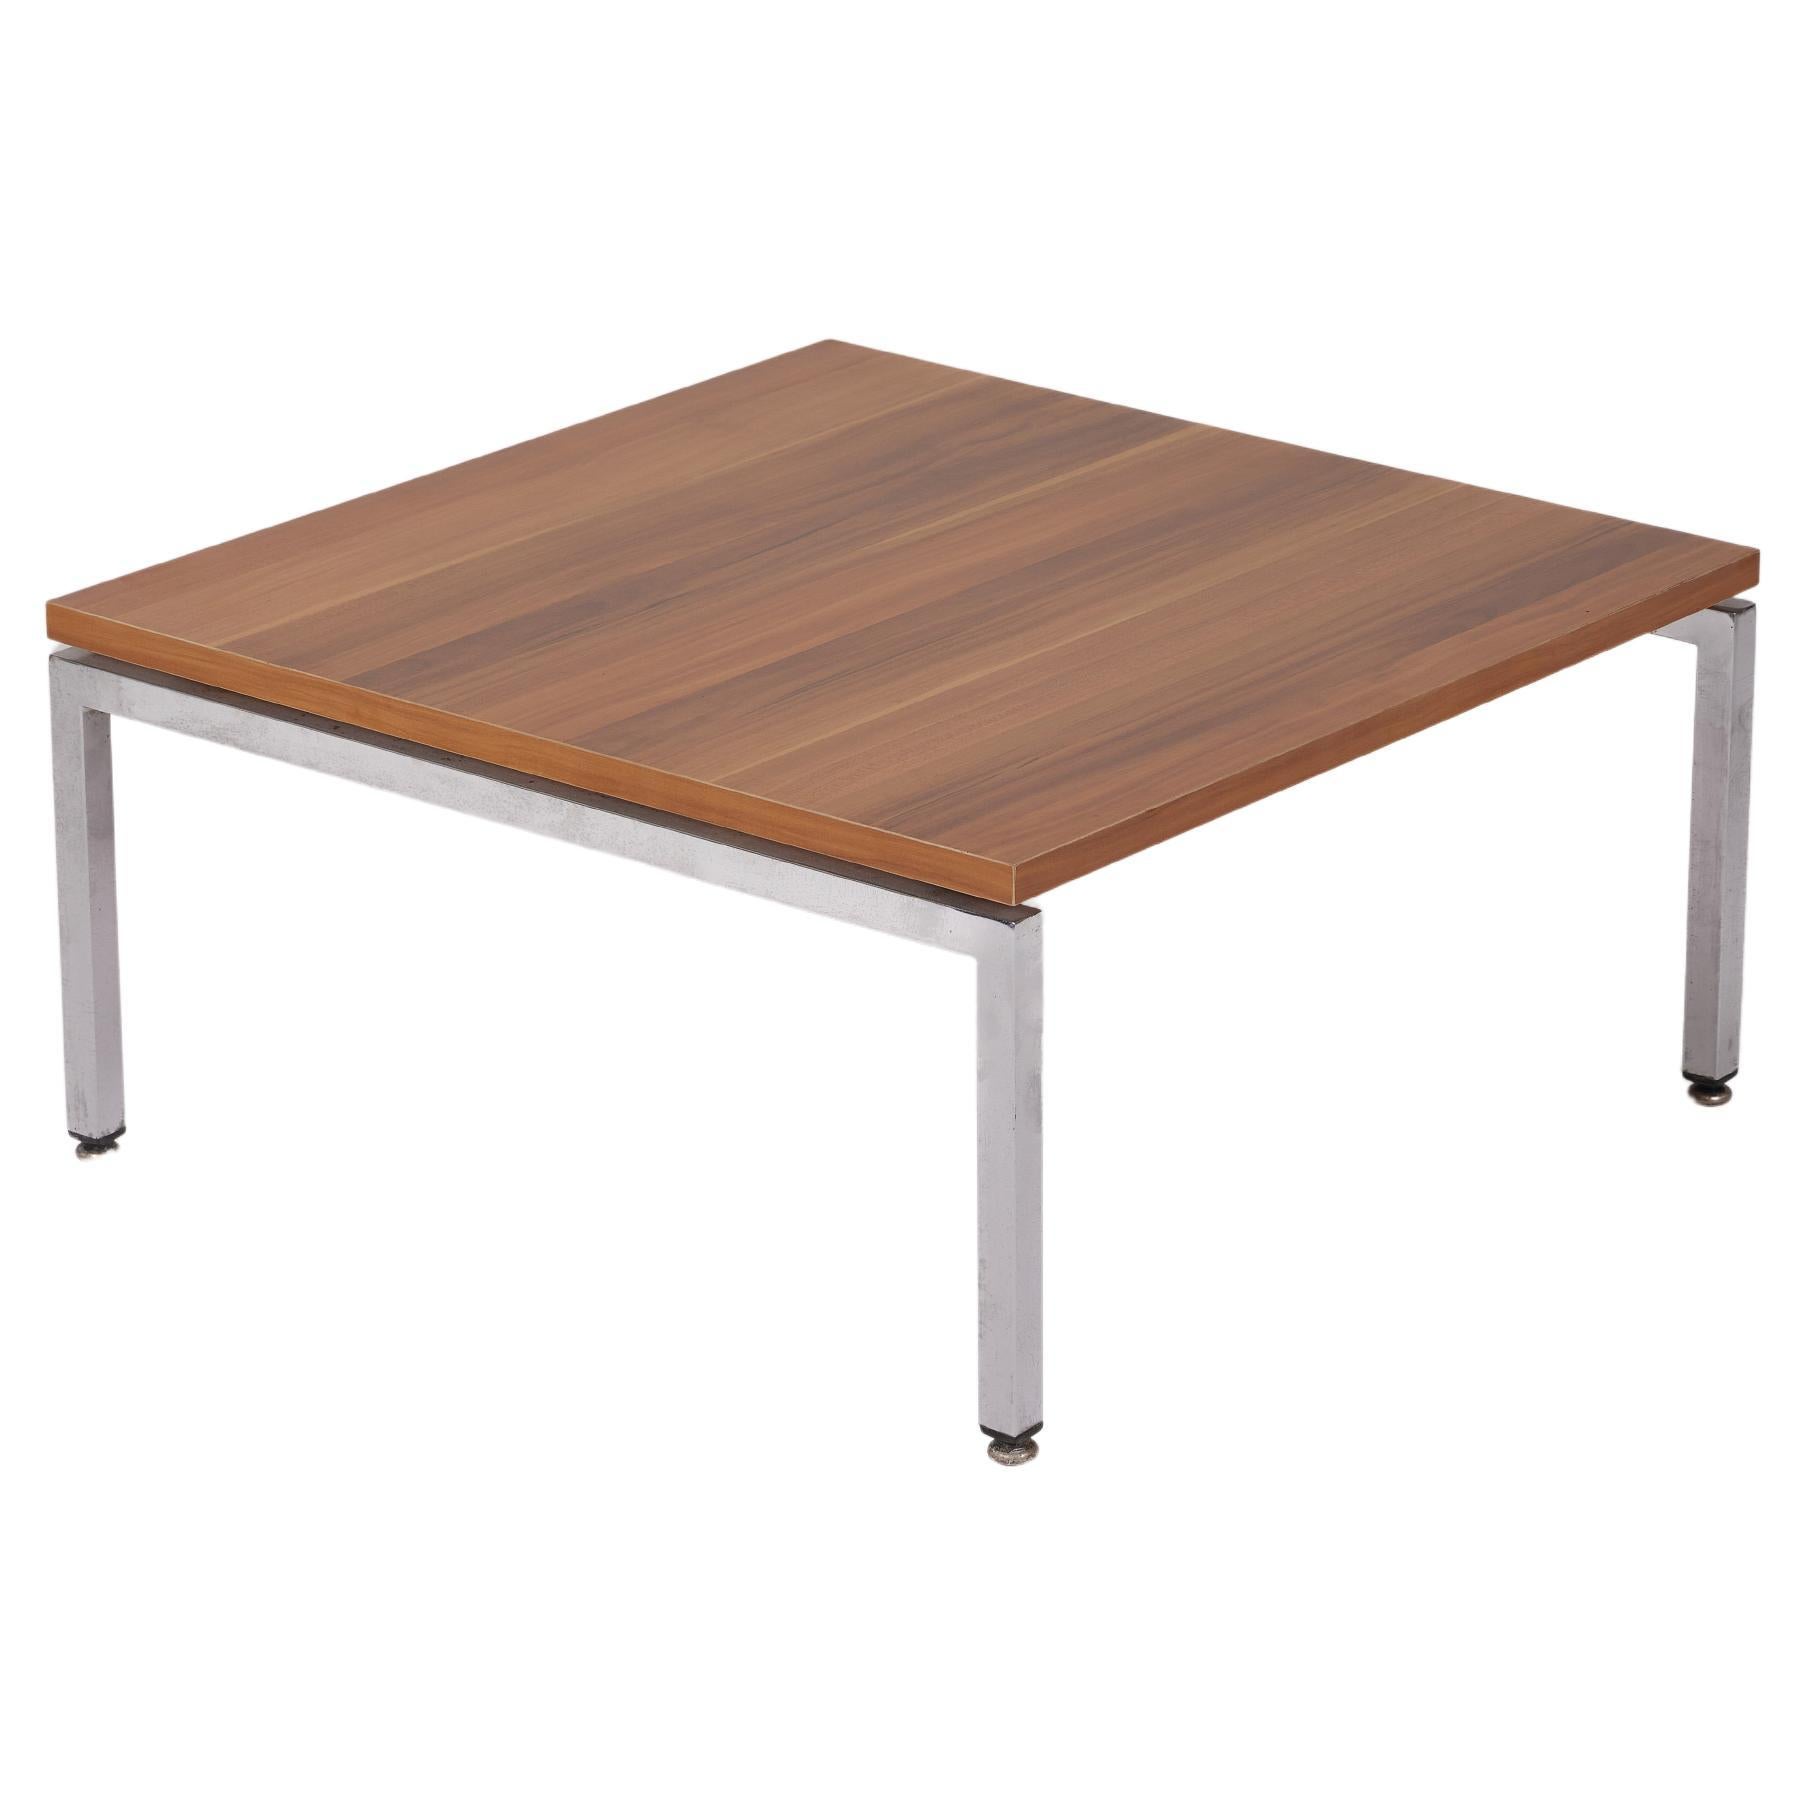 Wood and chrome-plated metal Knoll coffee table